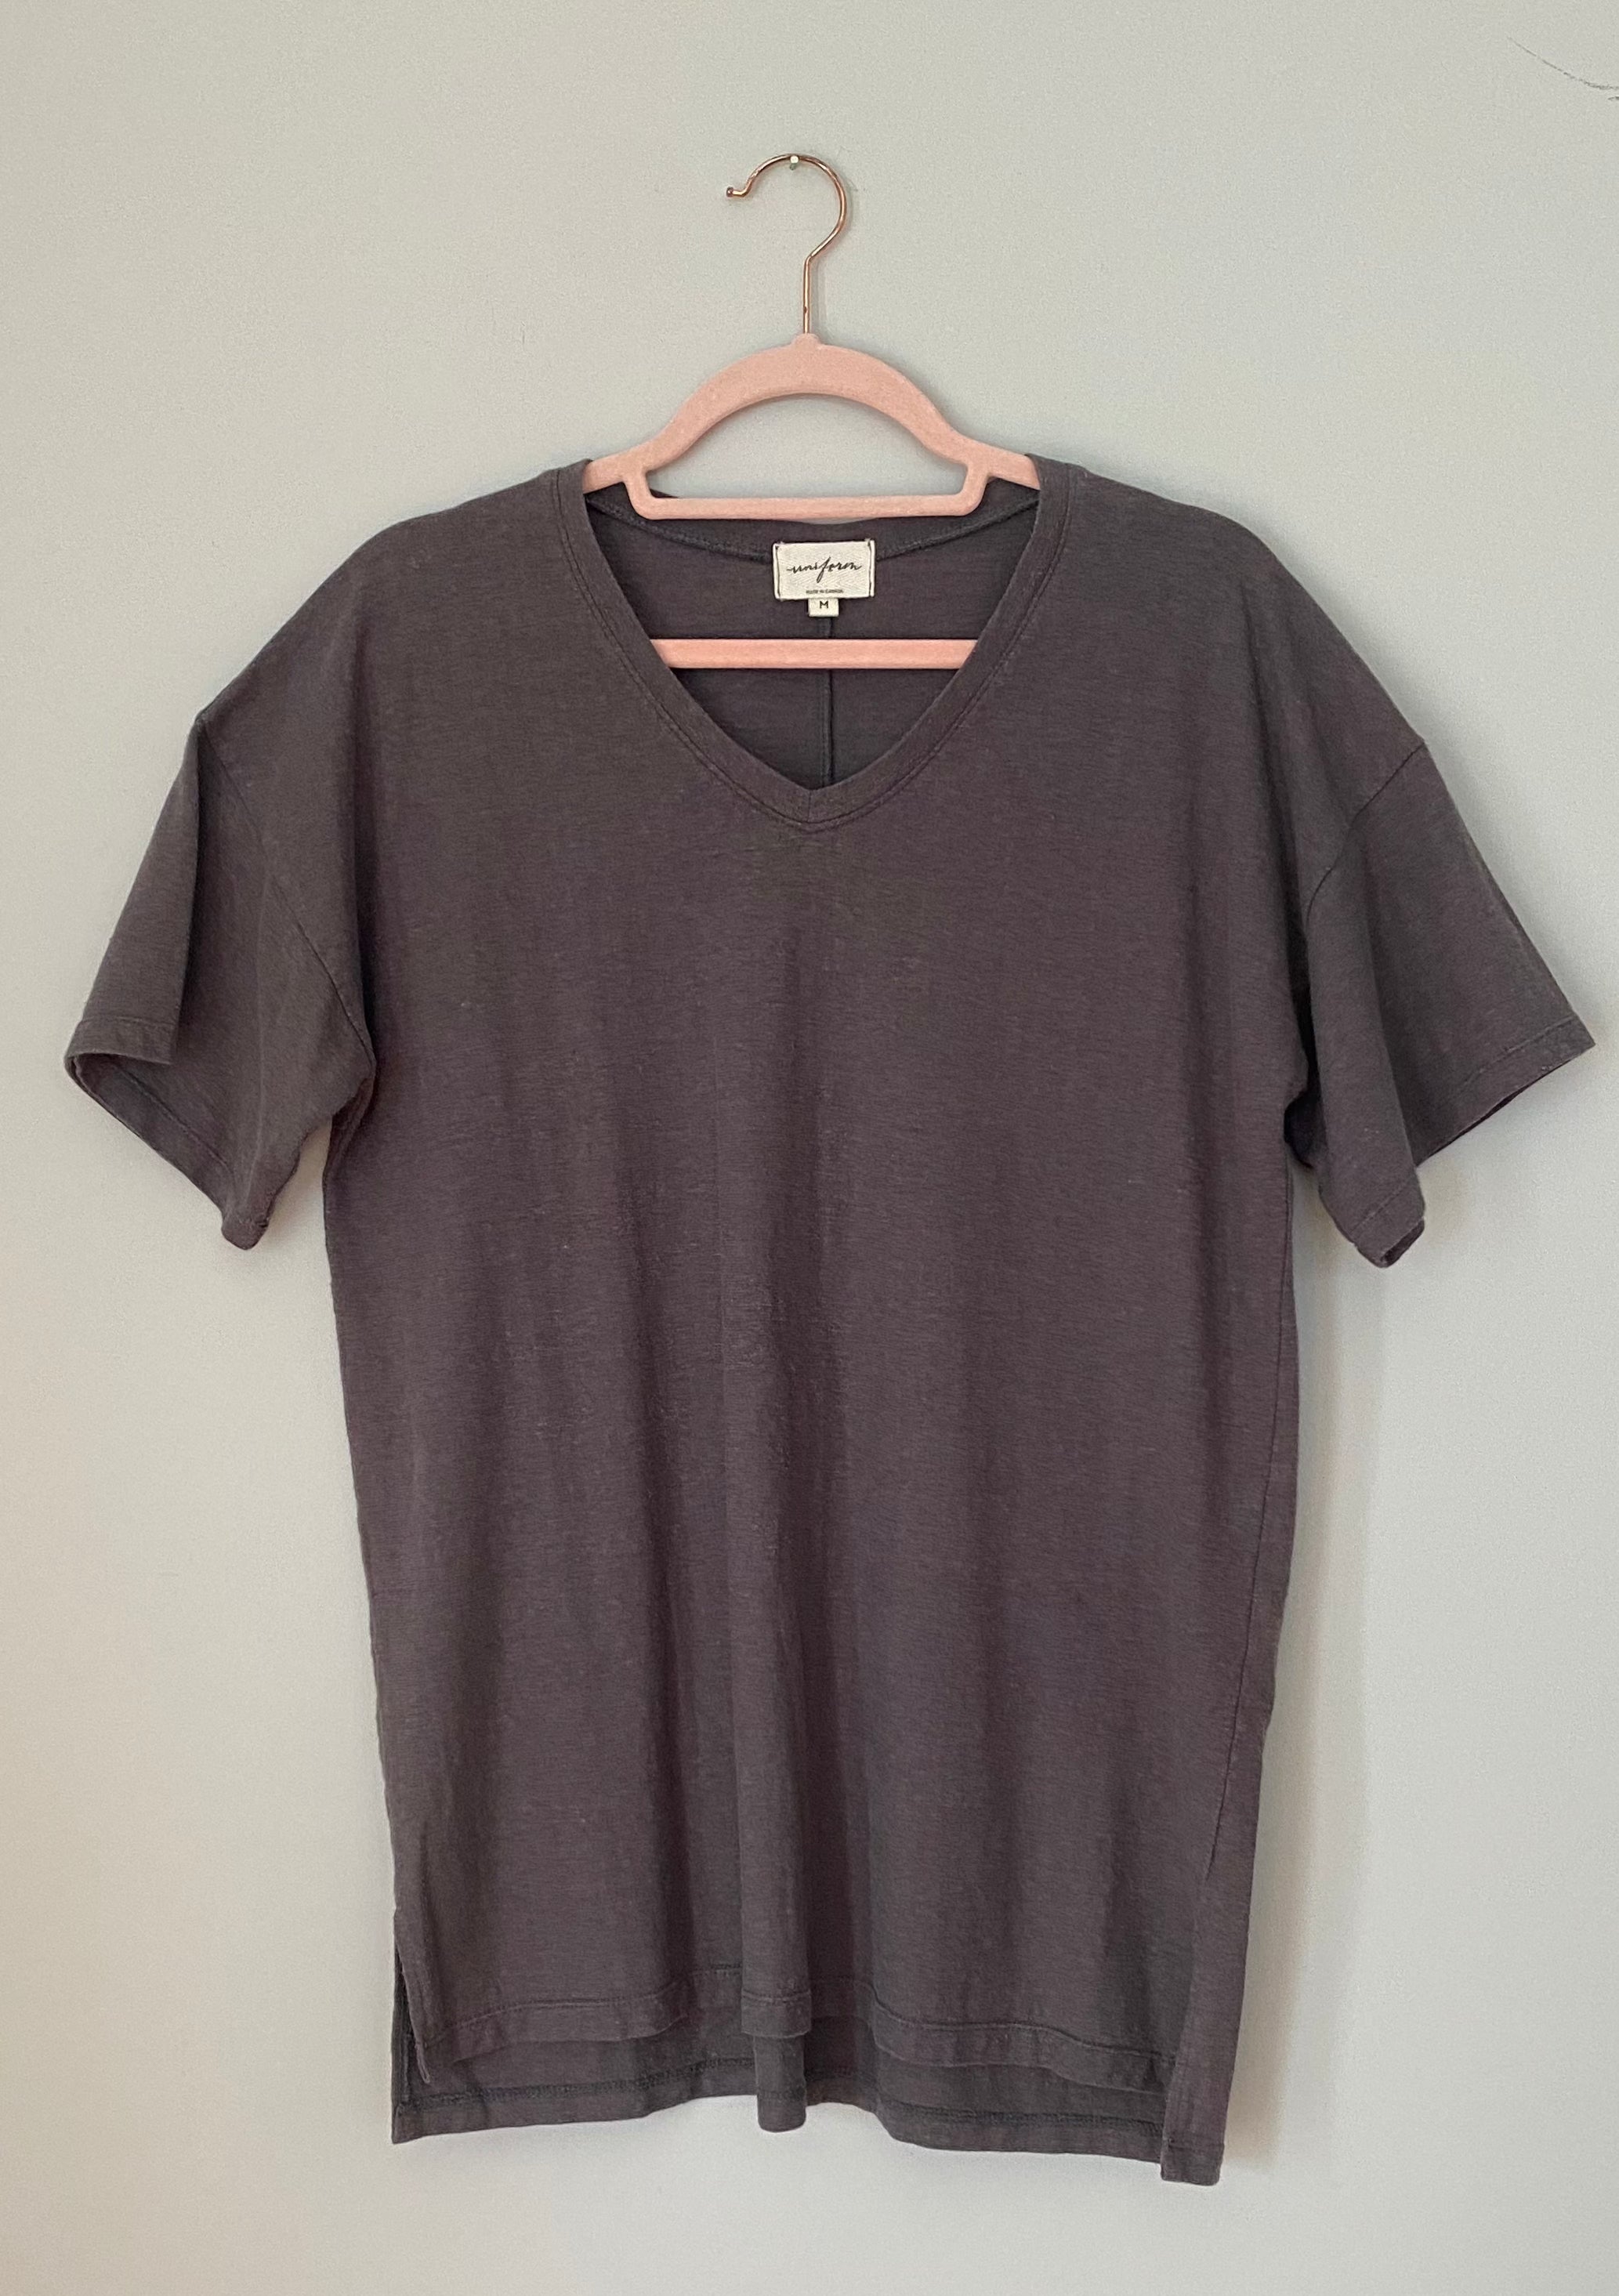 Marketplace, Medium, Tall, T Shirt, V Neck, Hemp Organic Cotton Jersey,  Charcoal